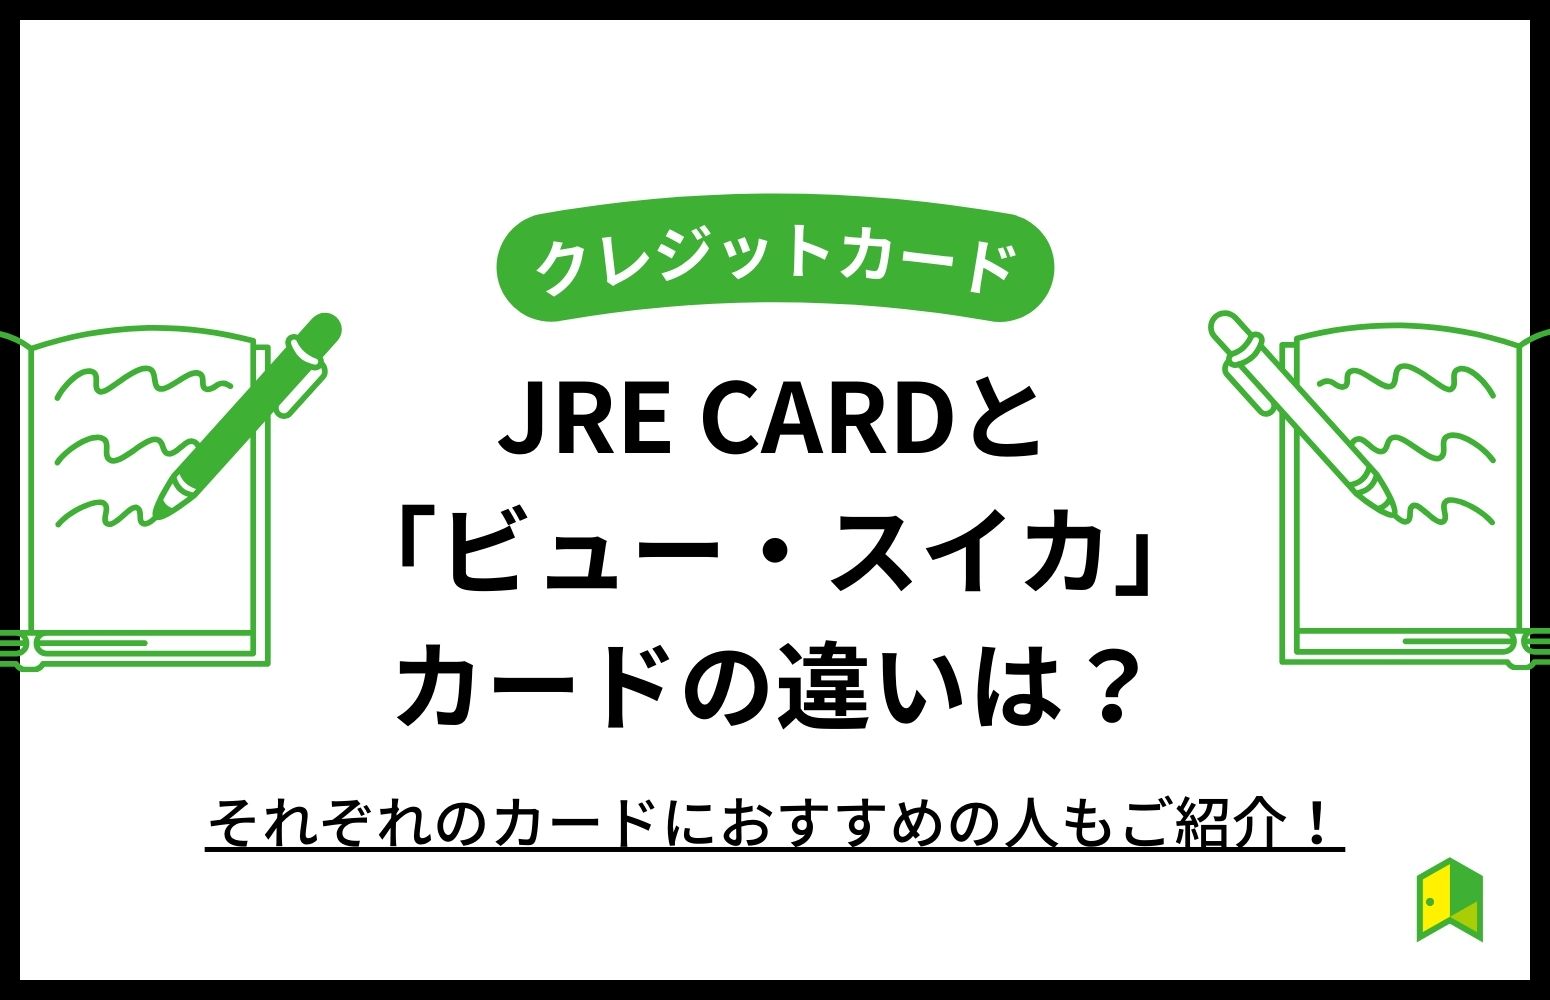 JRE CARDとビュー・スイカカードの違い